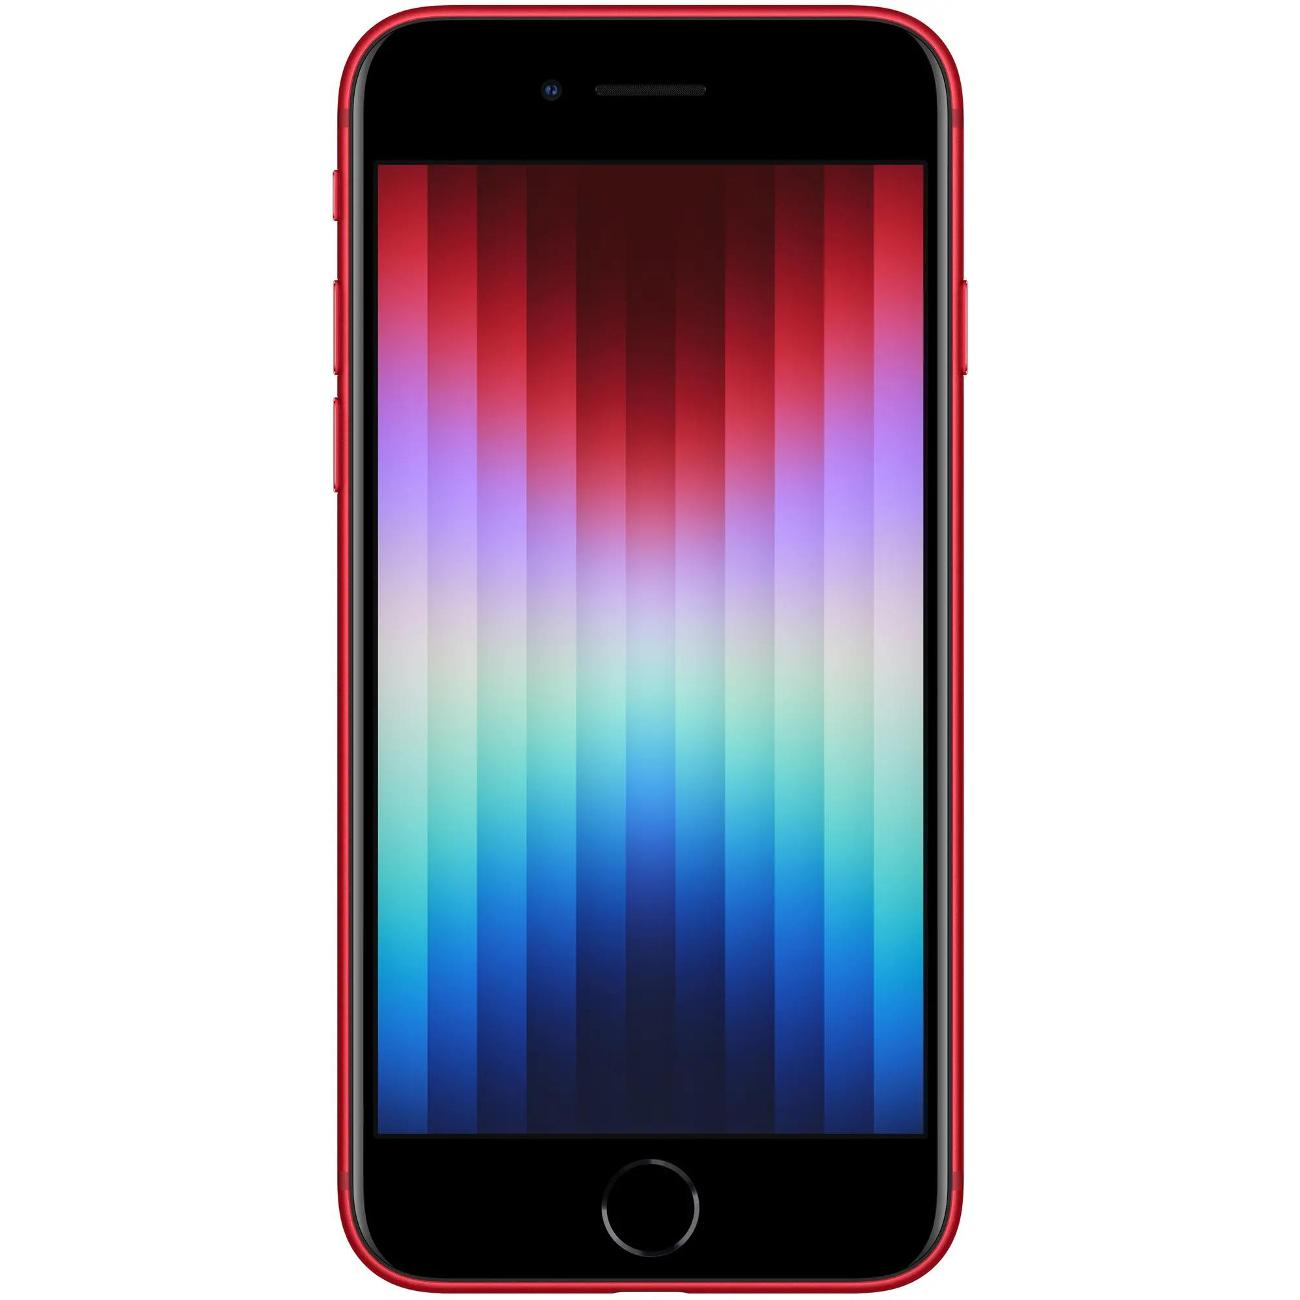 Смартфон Apple iPhone SE (2022) 64GB (ProDUCT)Red - купить смартфон Эпл  iPhone SE (2022) 64GB (ProDUCT)Red, цены в интернет-магазине Эльдорадо в  Москве, доставка по РФ